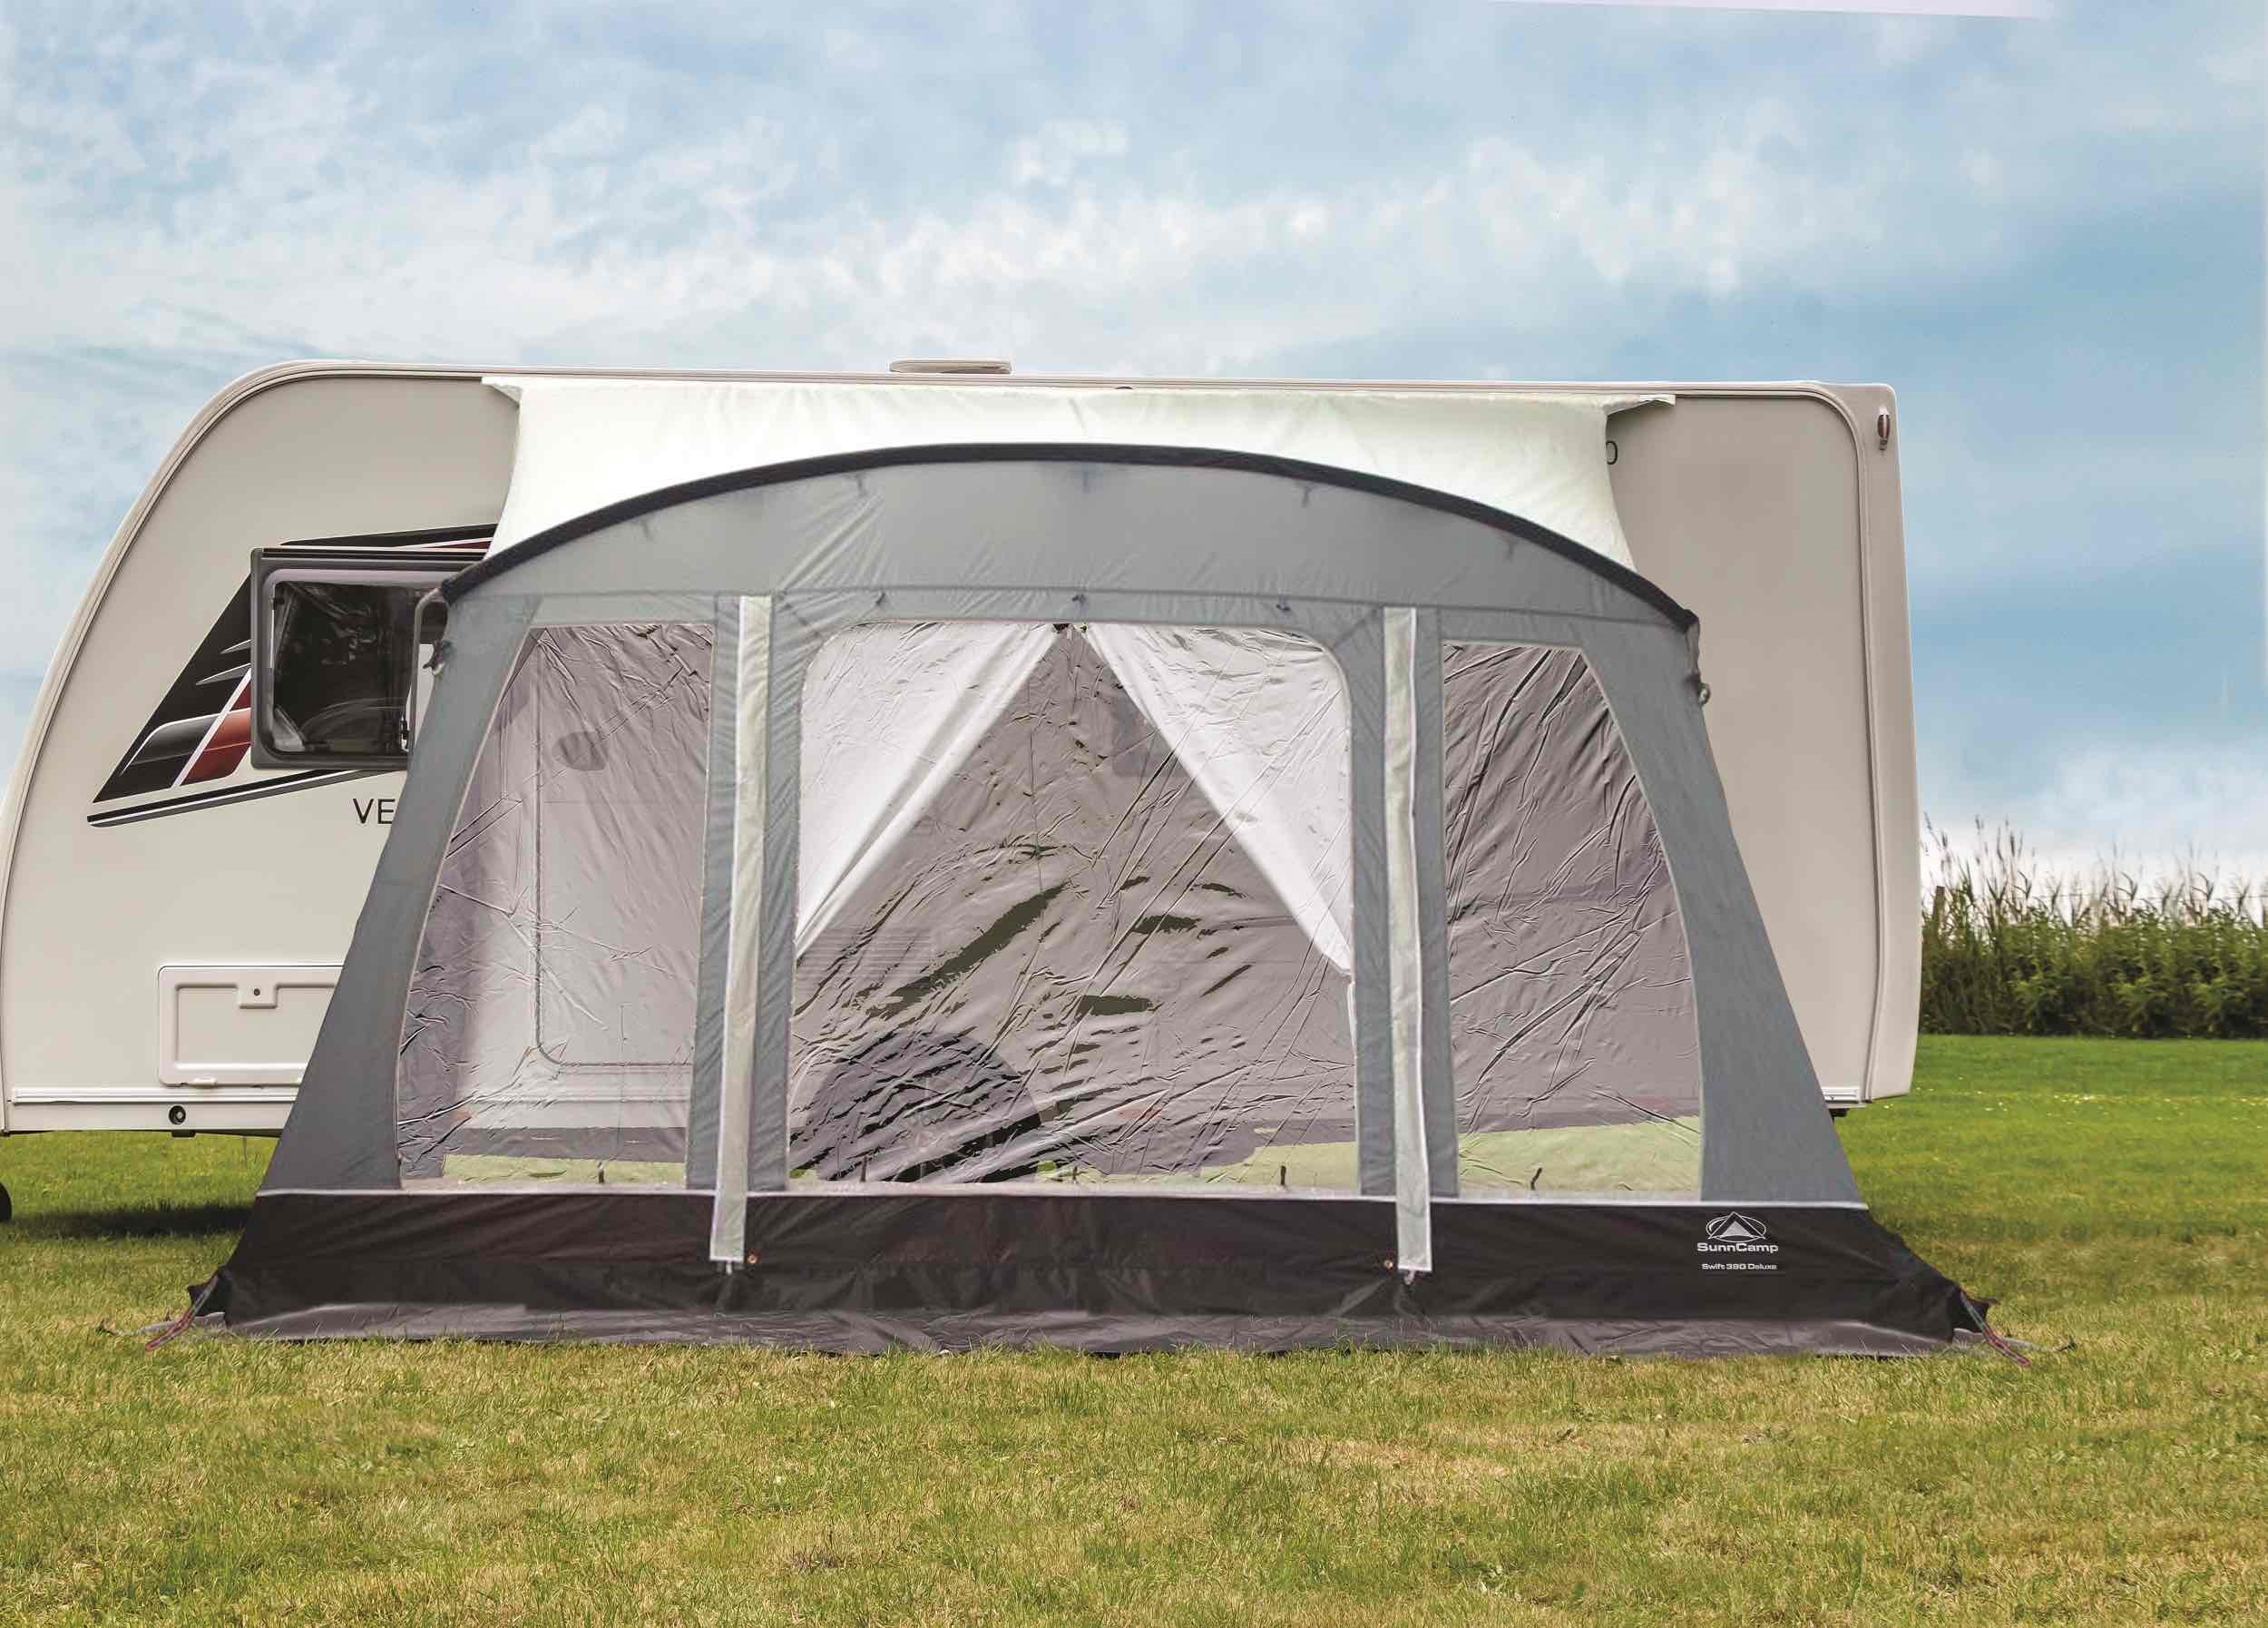 2019 Model Sunncamp Swift 390 Caravan Sun Canopy Awning RRP £170